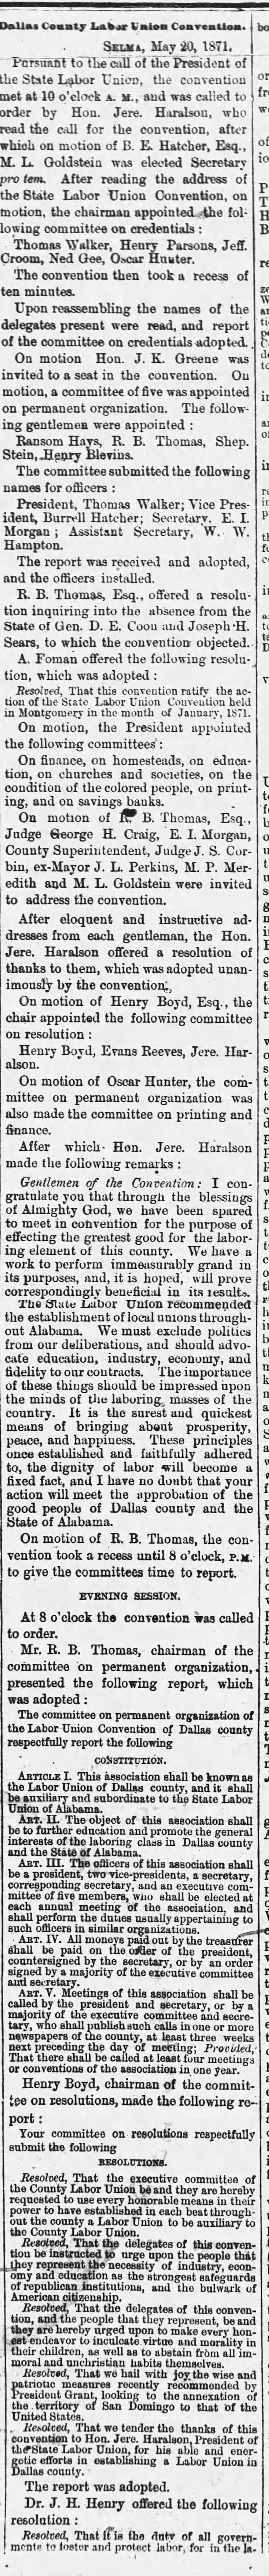 Burrell Hatcher in the News (1871)